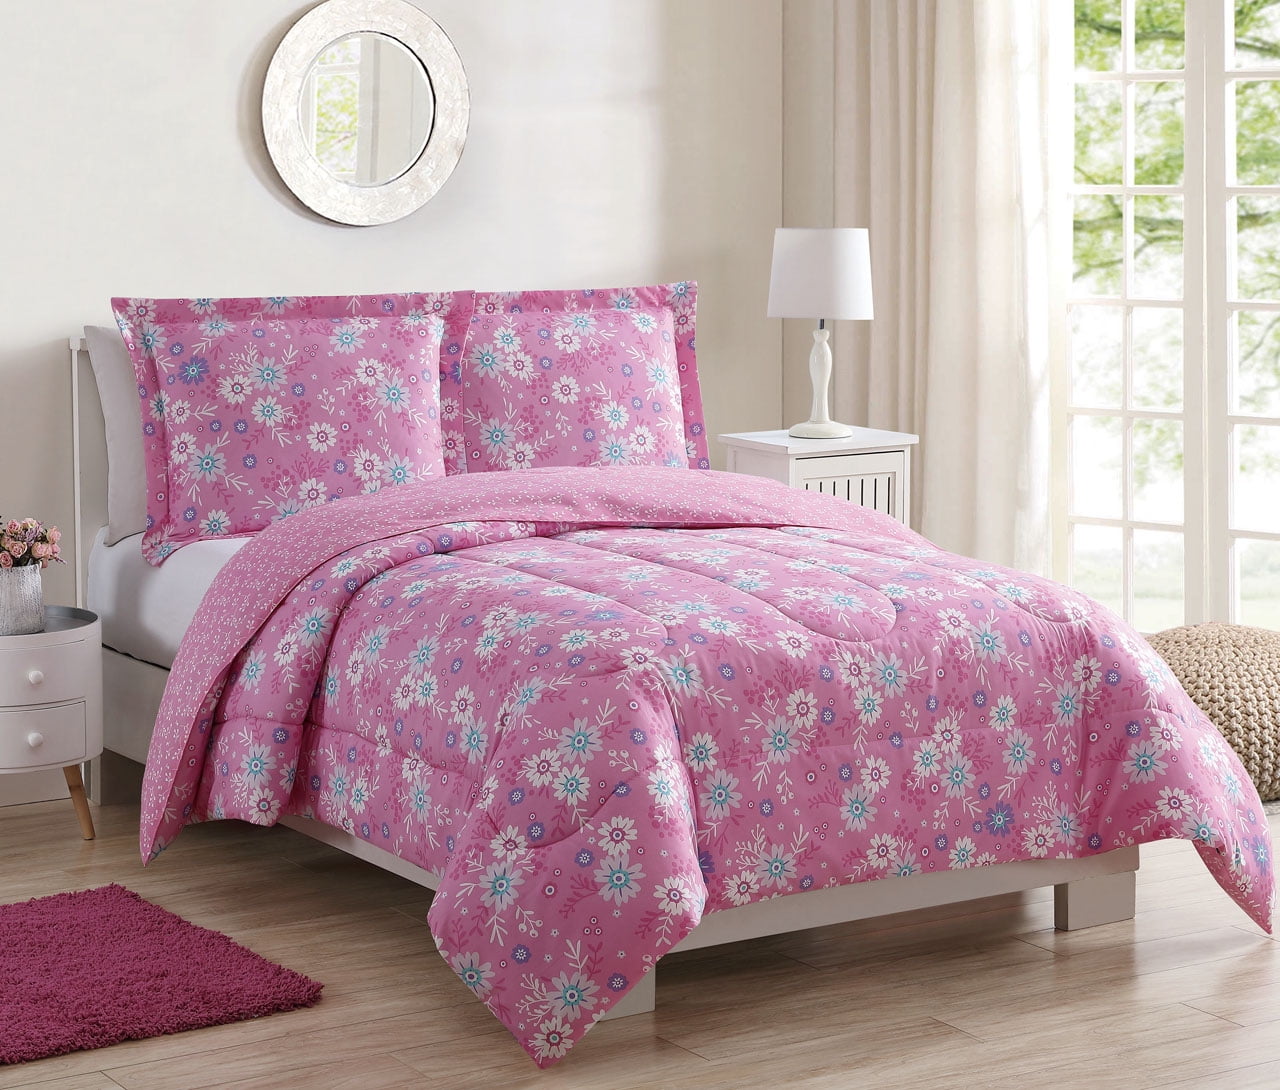 Juvy Lil Susie Pink/Blue/Purple Comforter Set - Walmart.com
